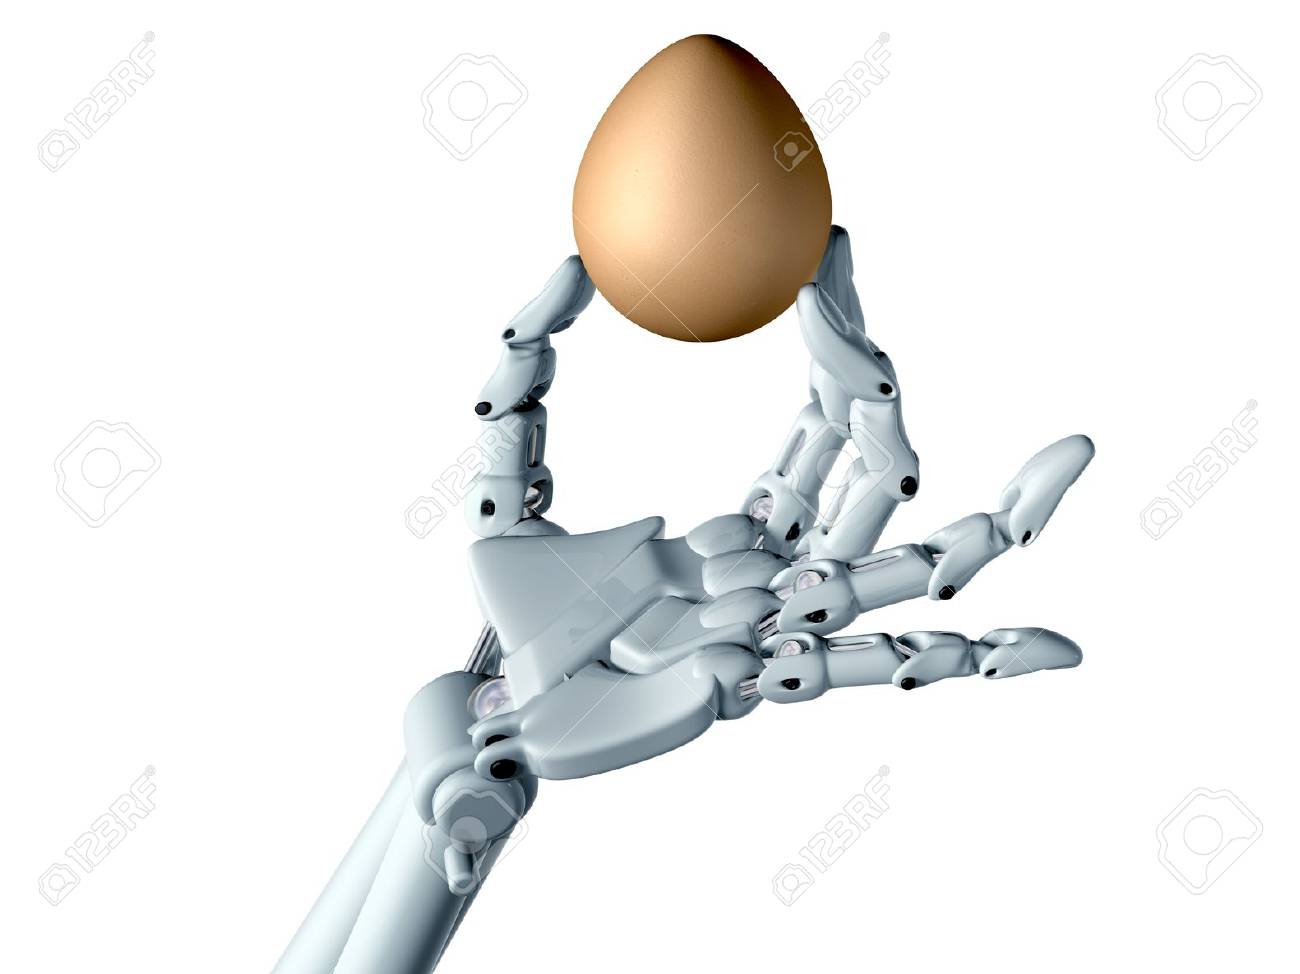 9739820-Robot-hand-tentatively-holding-a-fragile-egg-Stock-Photo-mechanical.jpg